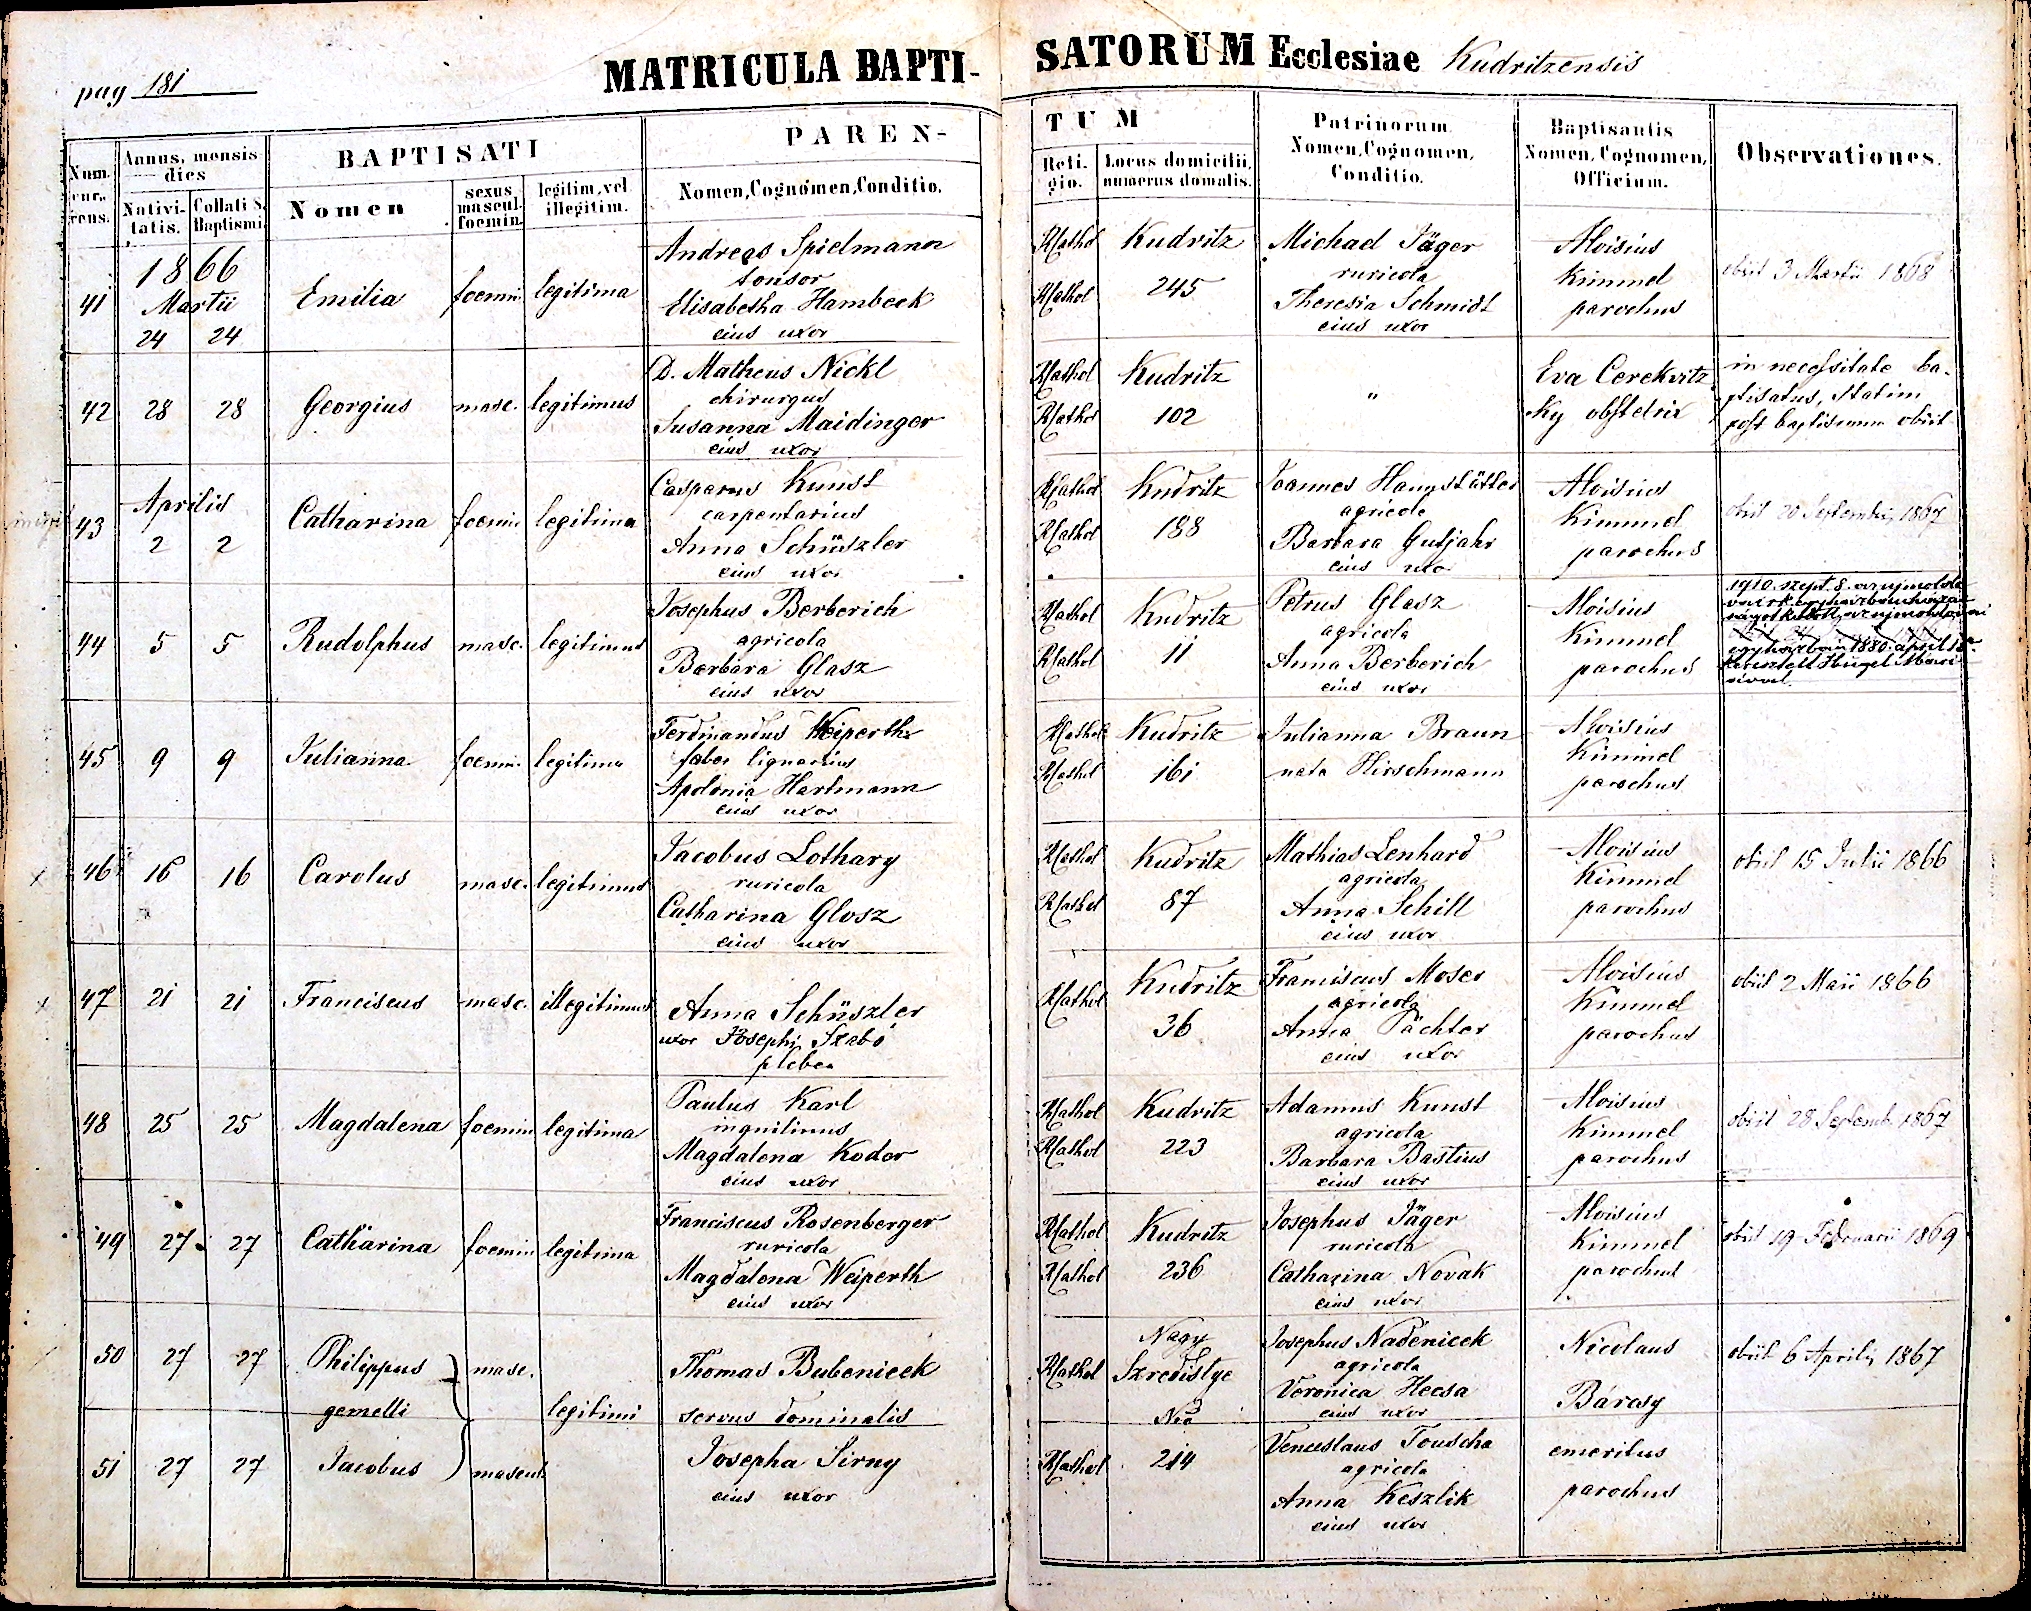 images/church_records/BIRTHS/1852-1870B/181